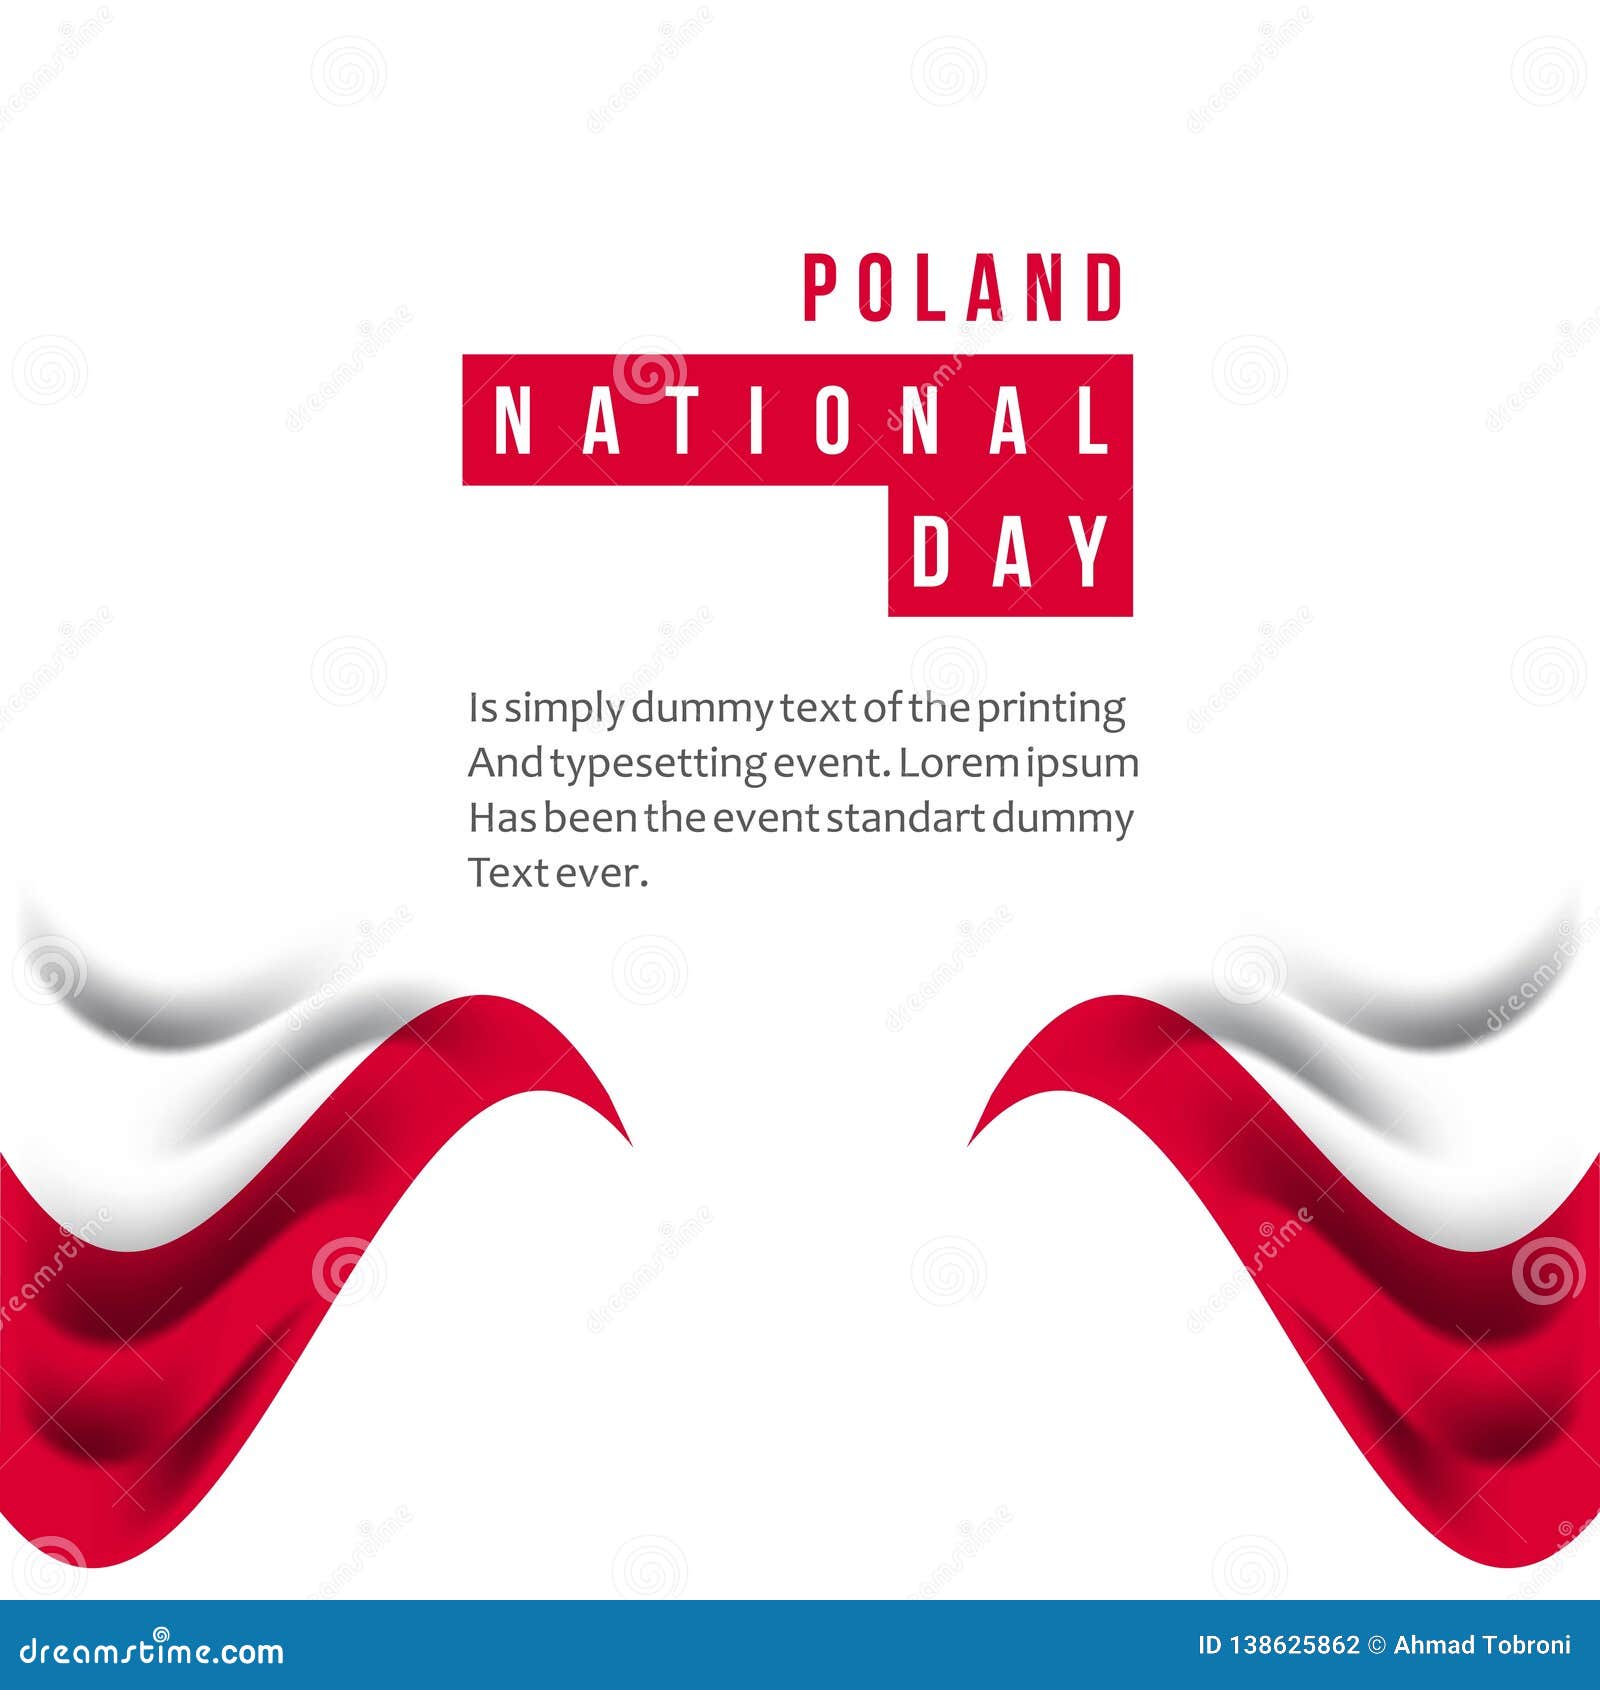 Polen-Nationaltag-Vektor-Schablonen-Entwurfs-Illustration. Polen-Nationaltag-Vektor-Entwurfs-Illustration